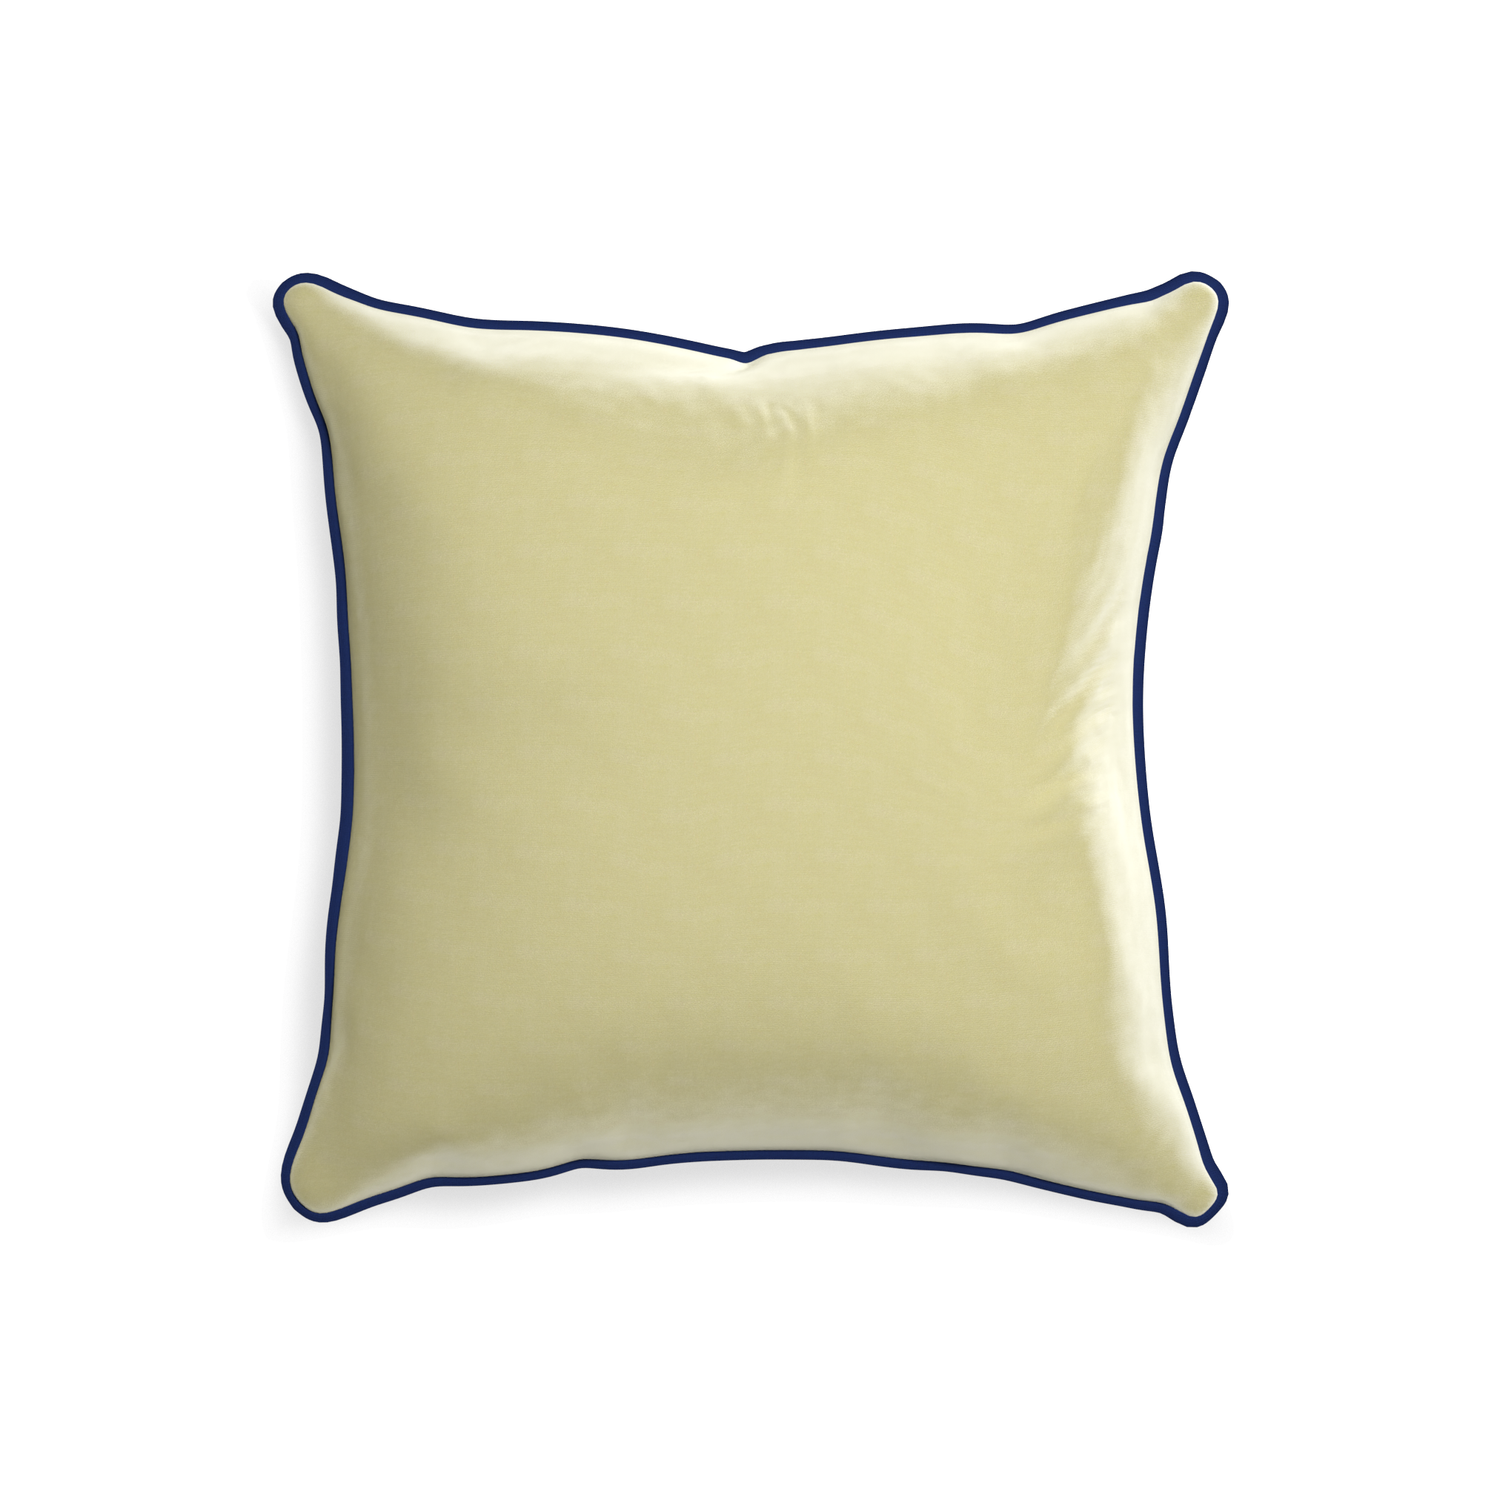 square light green velvet pillow with navy blue piping